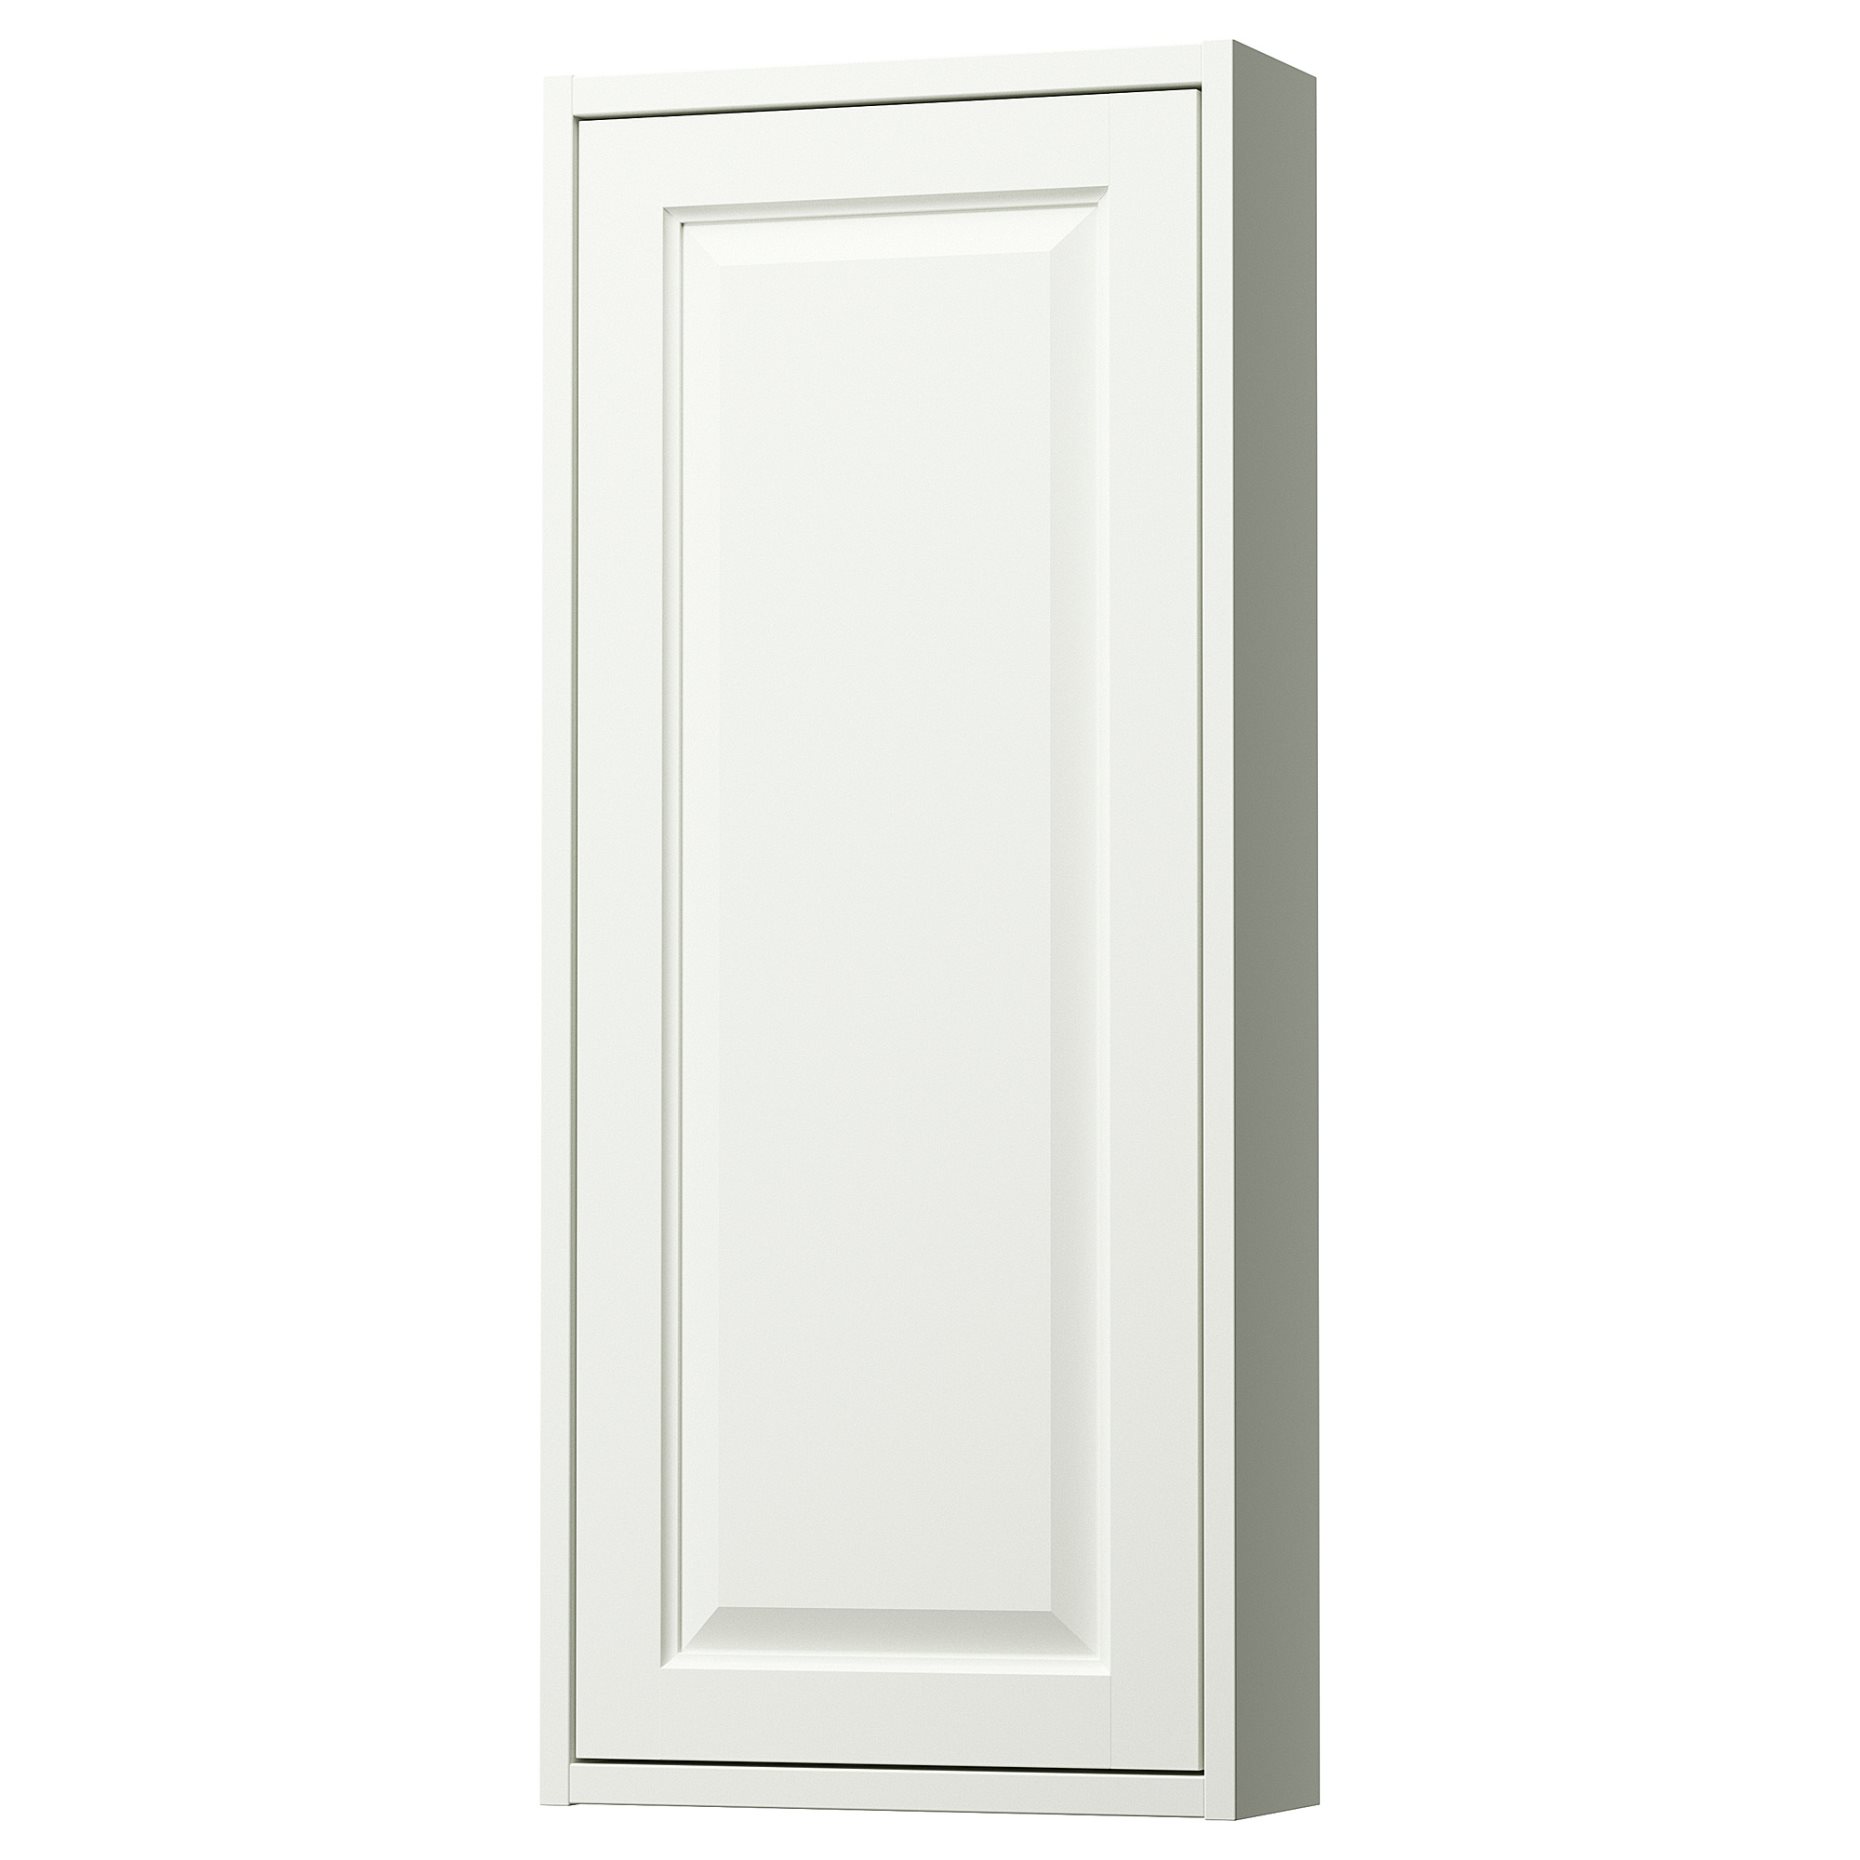 TANNFORSEN, ντουλάπι τοίχου με πόρτα, 40x15x95 cm, 505.351.08